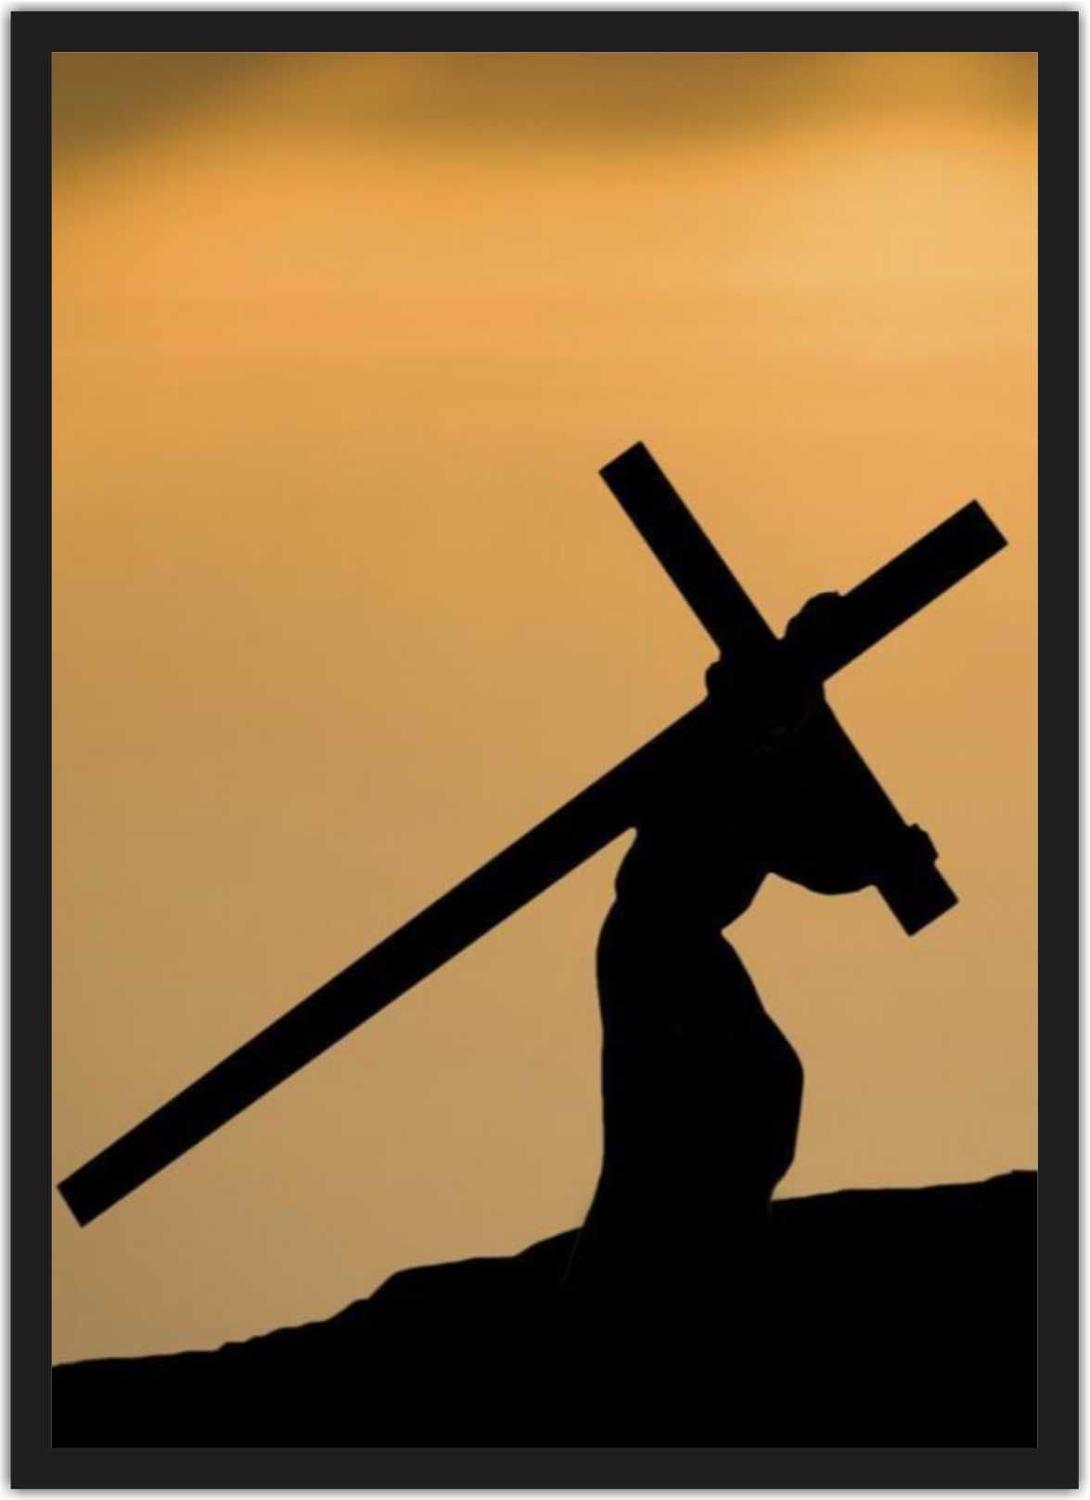 Featured image of post Foto Jesus Cristo Na Cruz / George hodan lançou esta imagem jesus cristo na cruz sob licença de domínio público.